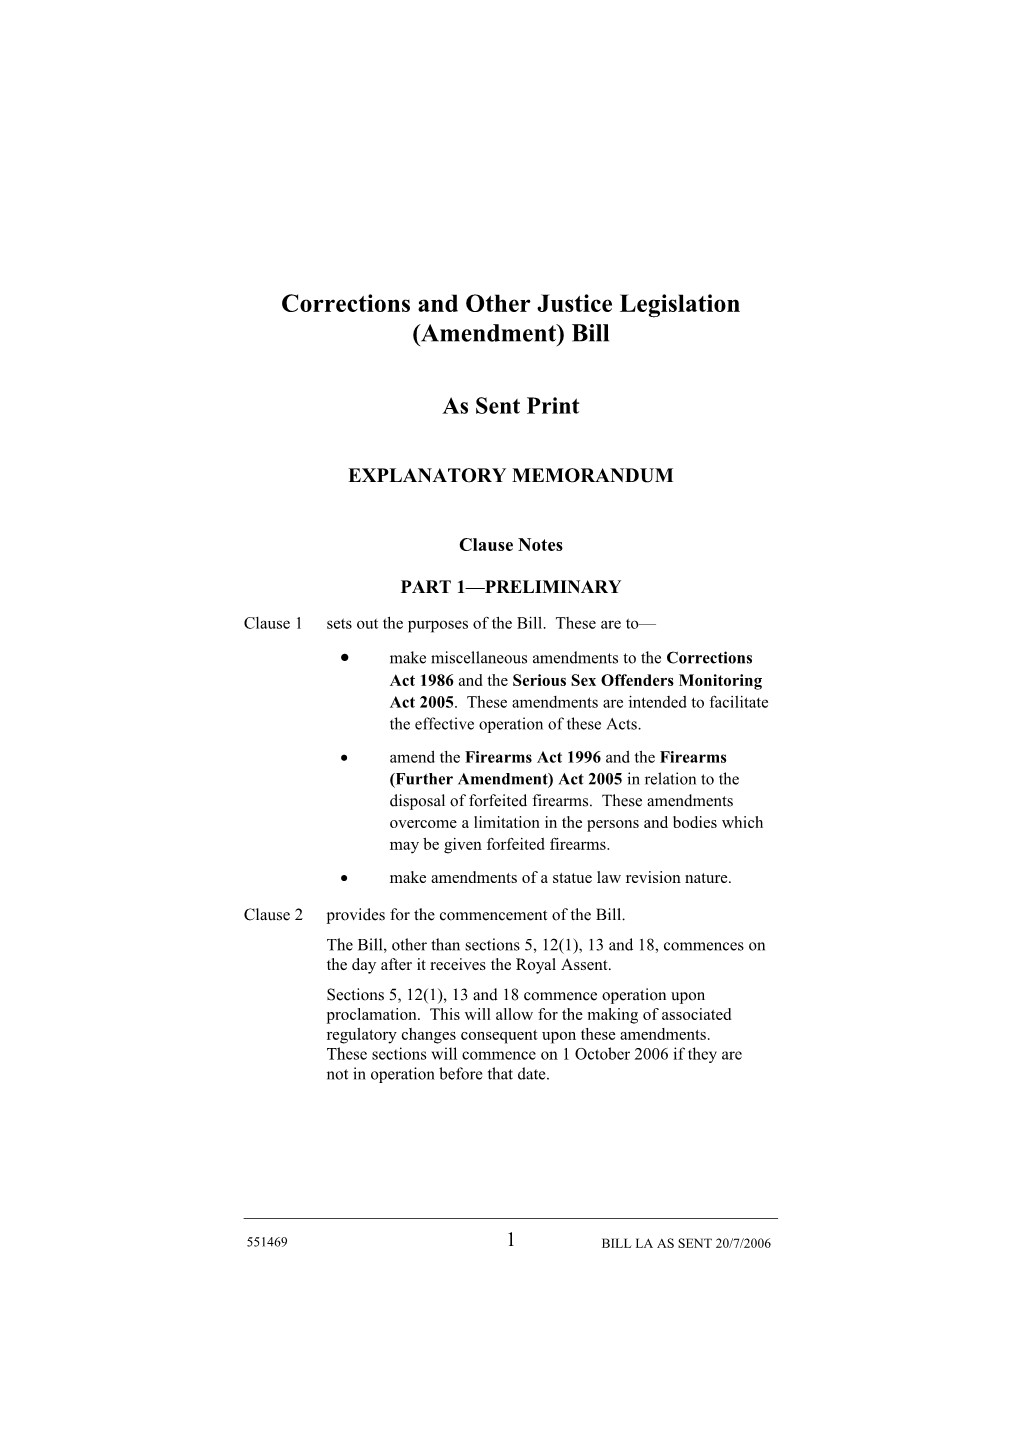 Corrections and Other Justice Legislation (Amendment) Bill